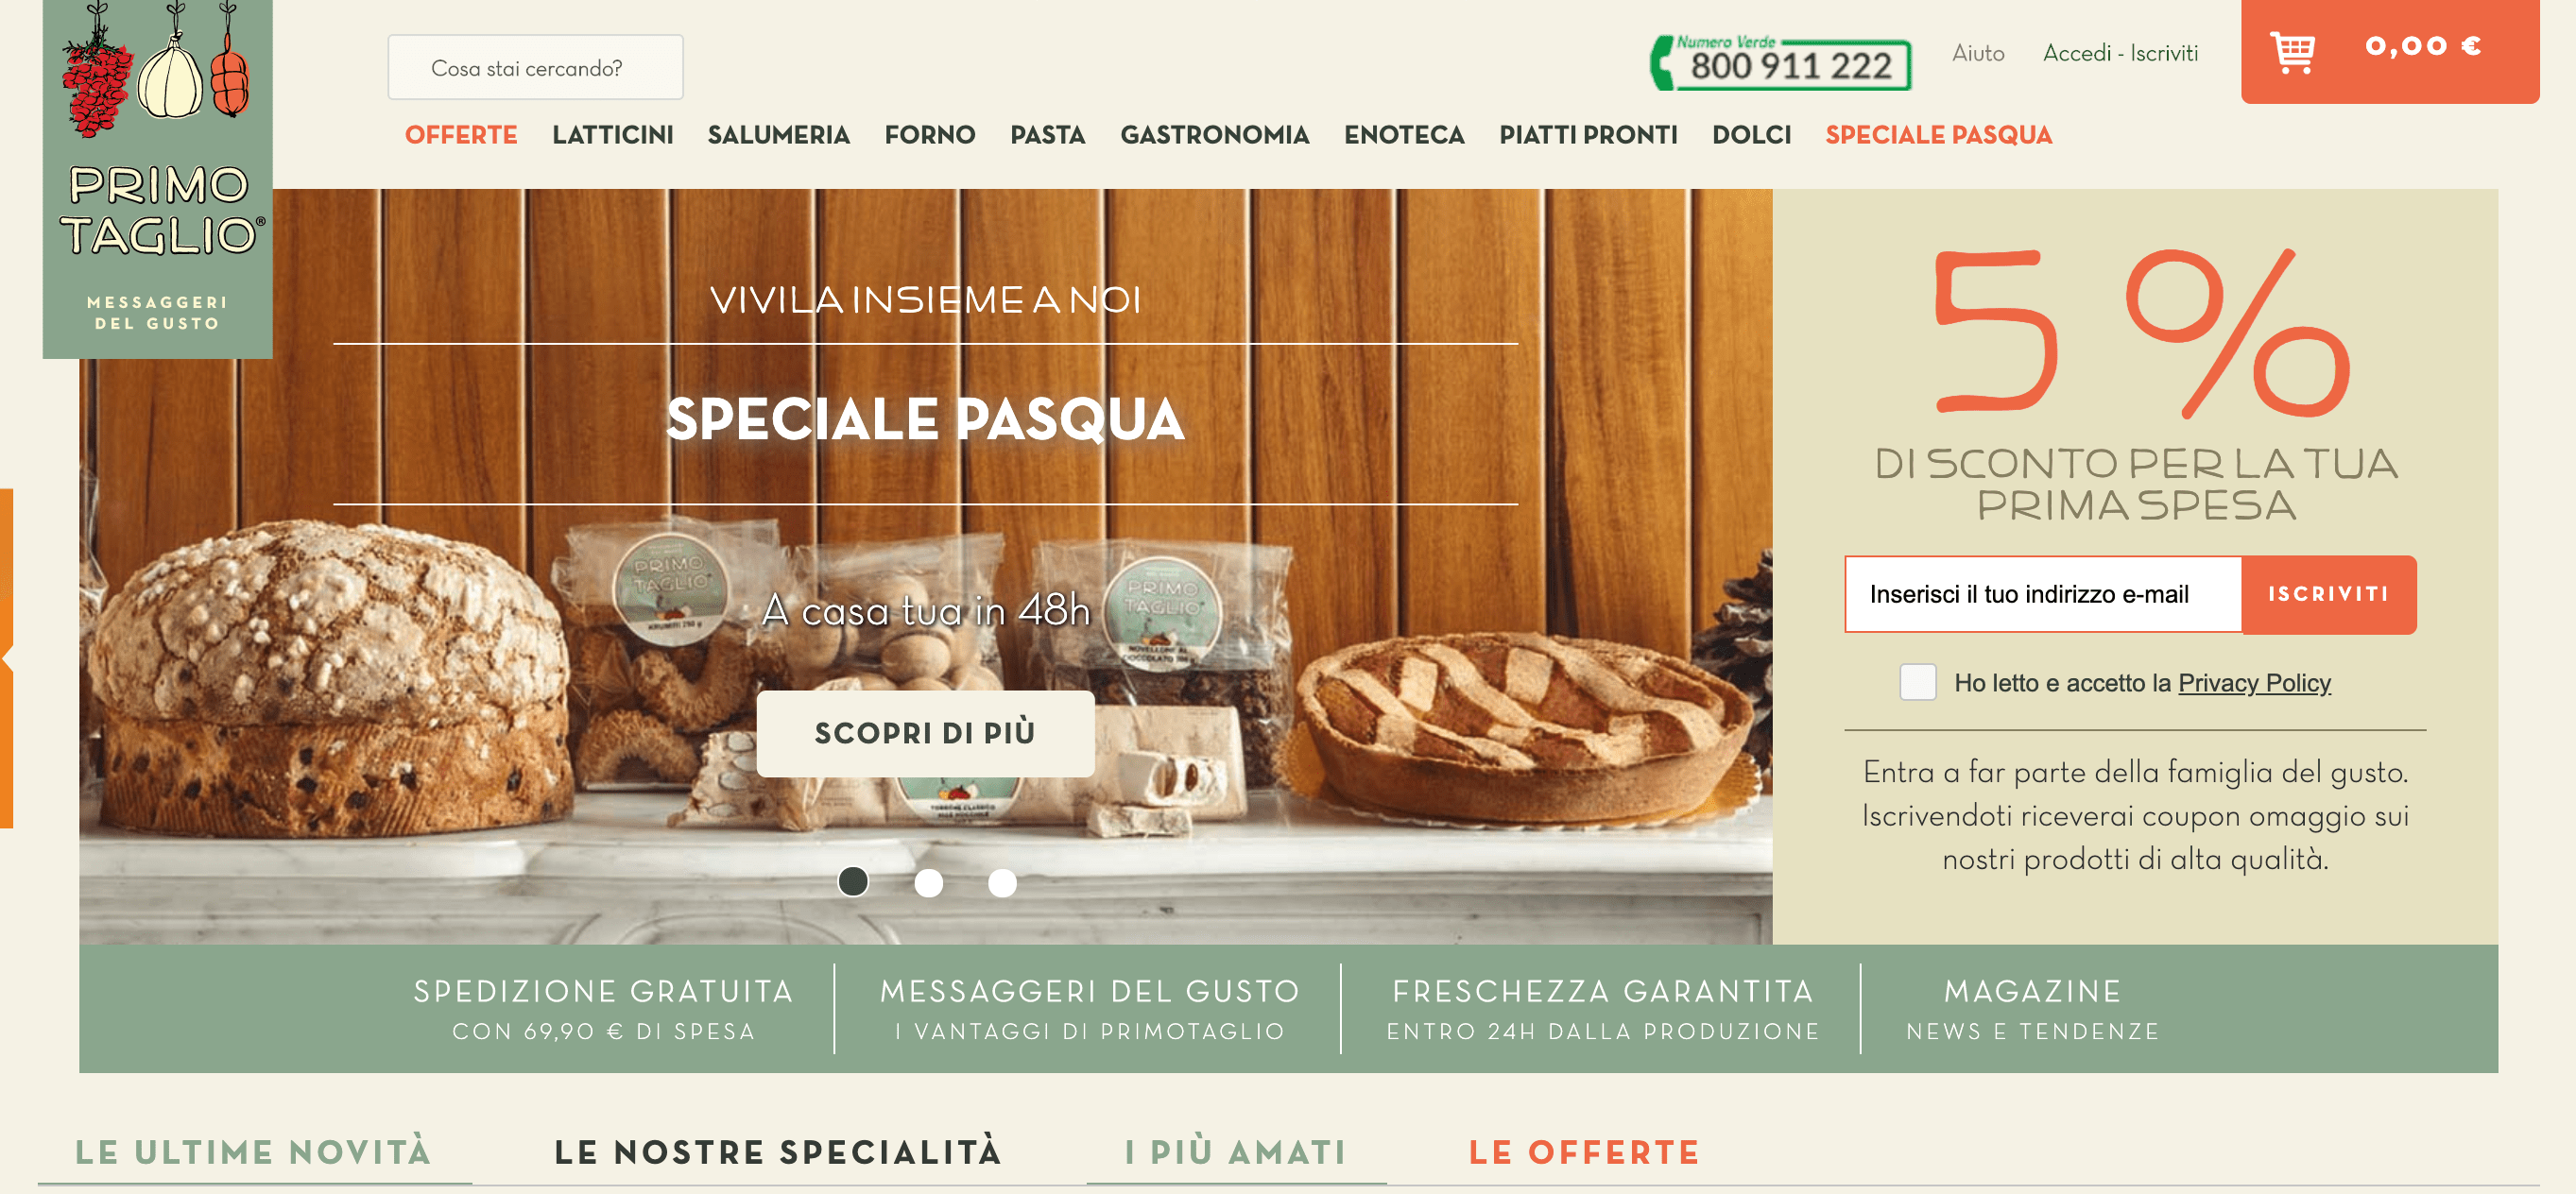 primotaglio.it_Speciale-Pasqua